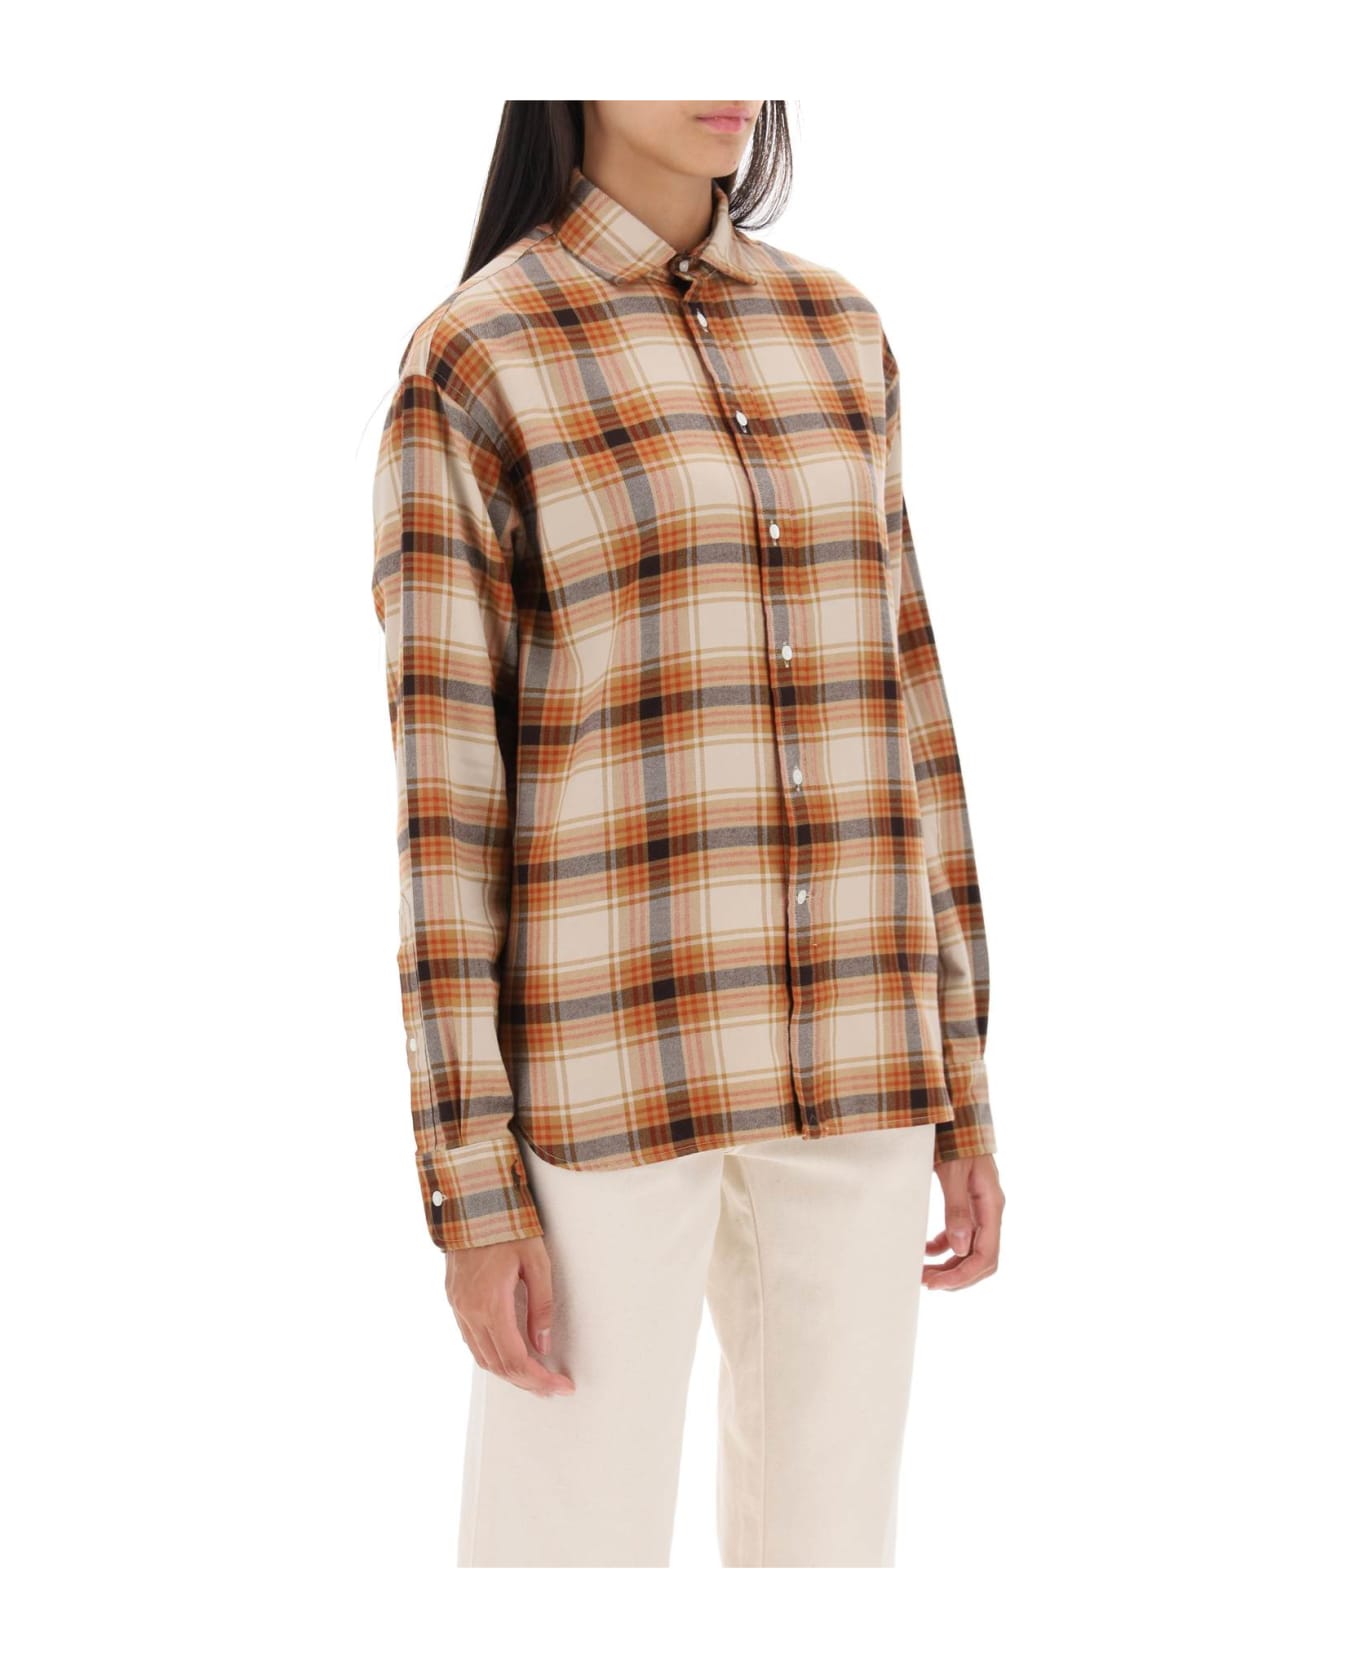 Polo Ralph Lauren Check Flannel Shirt - TAN MULTI PLAID (Beige)